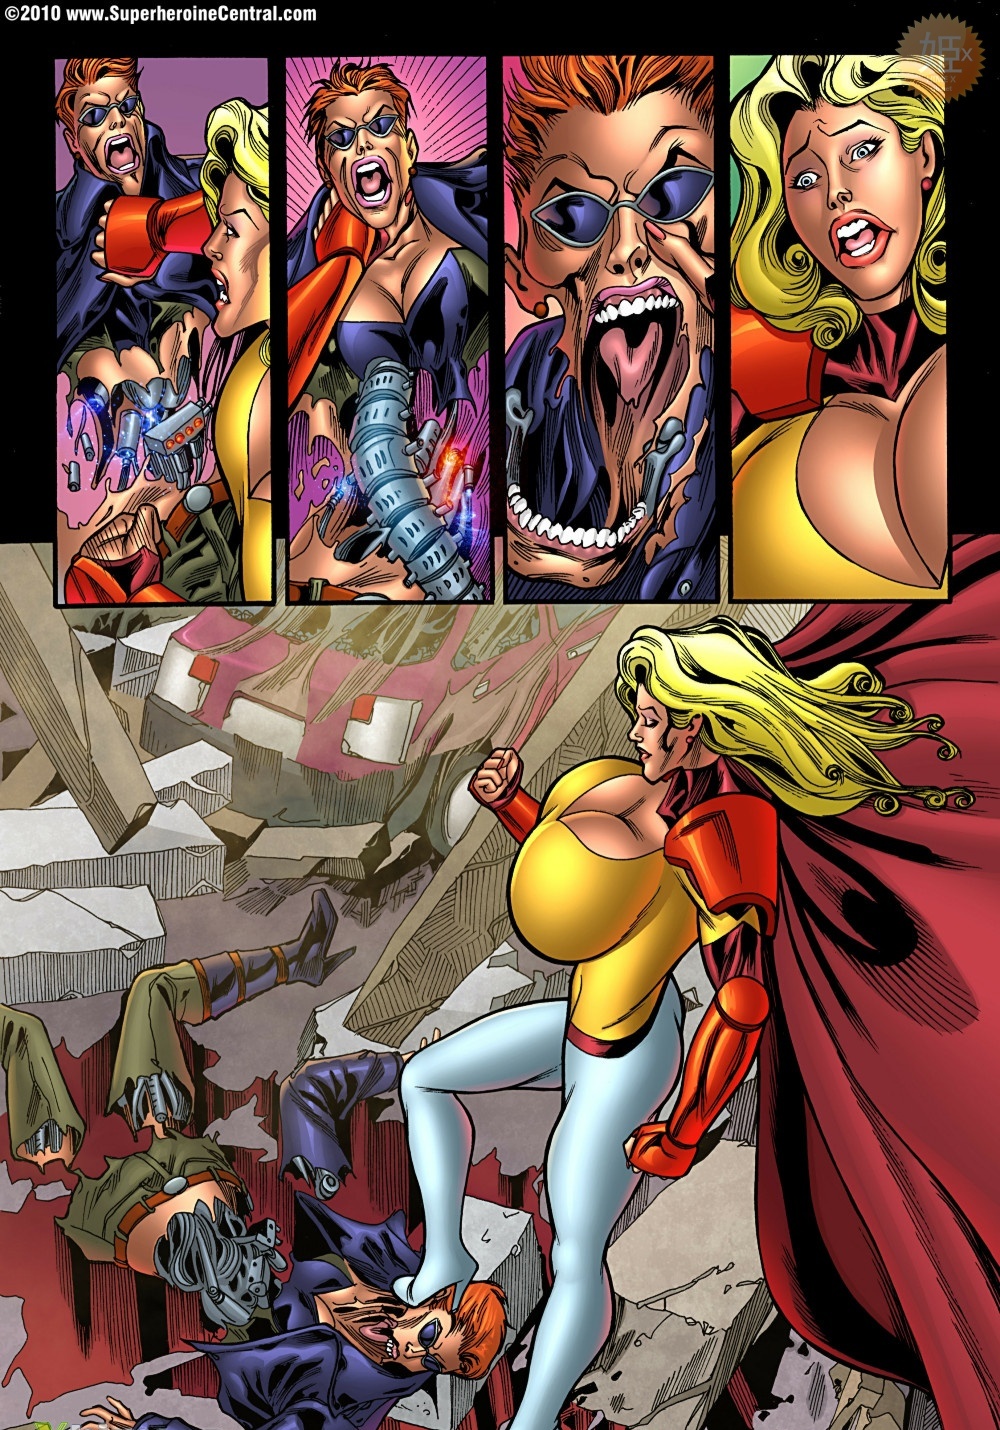 Superheroine Comixxx - Her greater joys